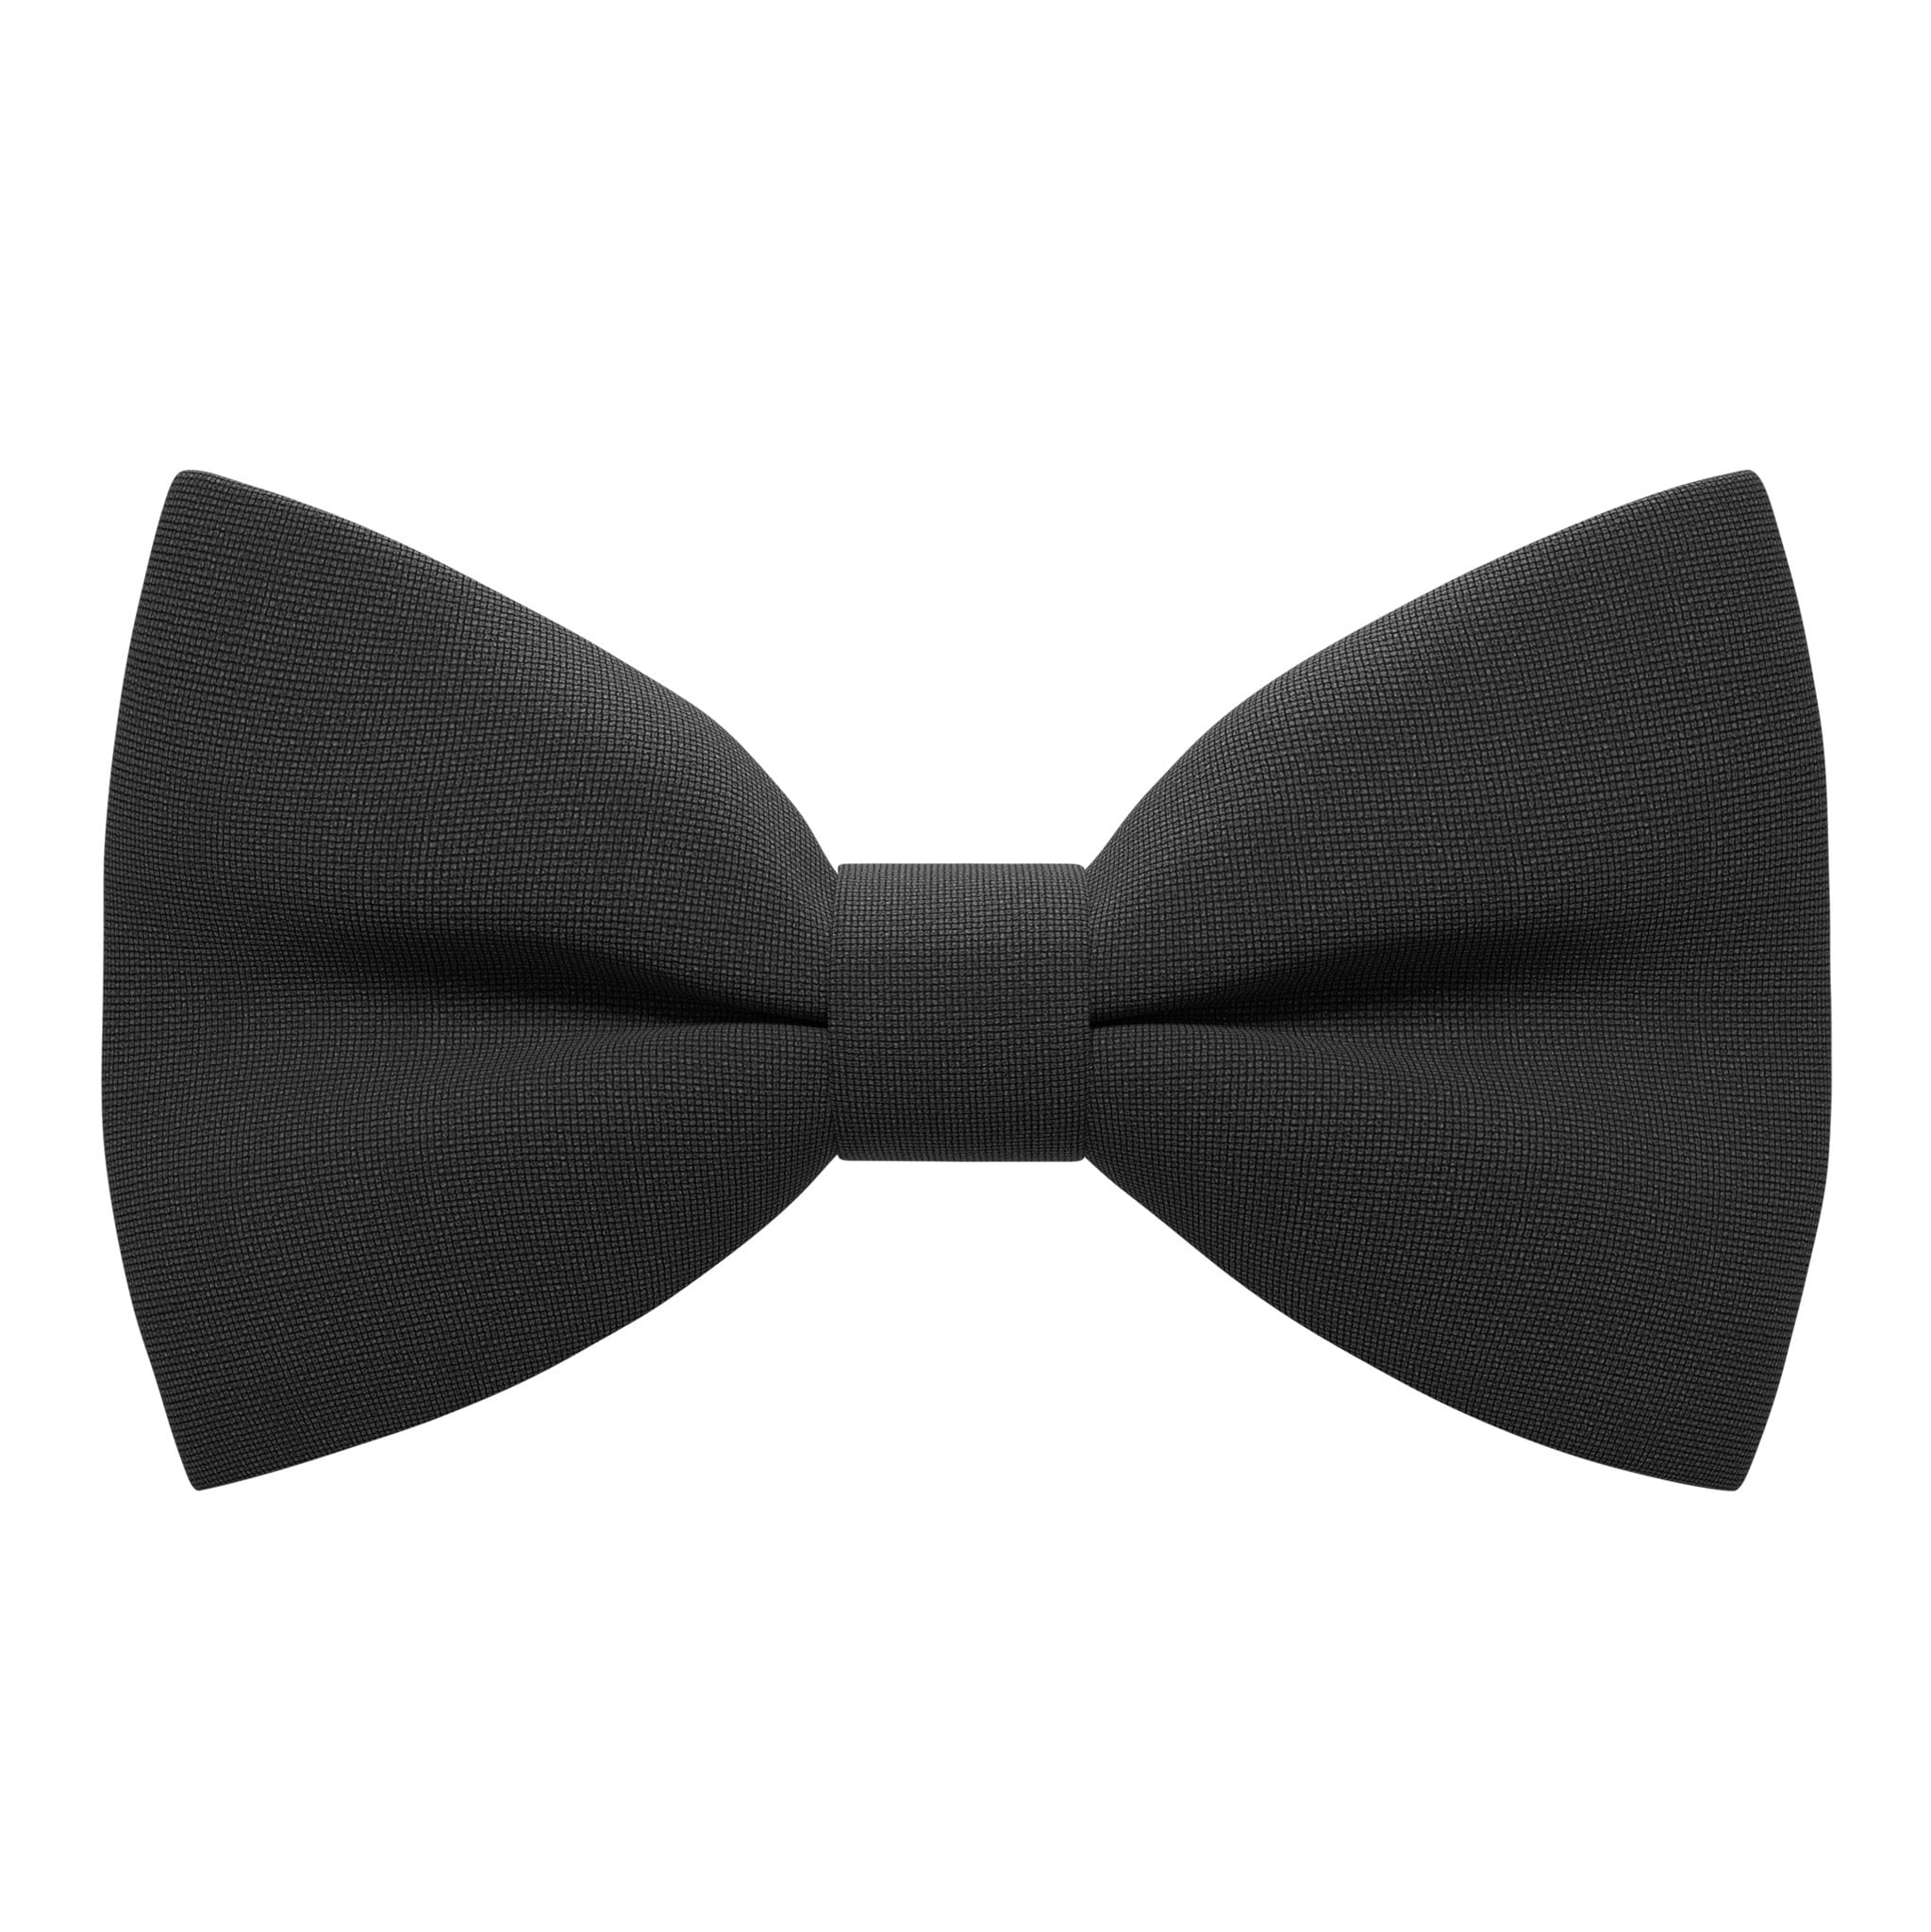 White Red Black BowTie Set of 3 Neckwear Adjustable Adult Men Bow Tie 